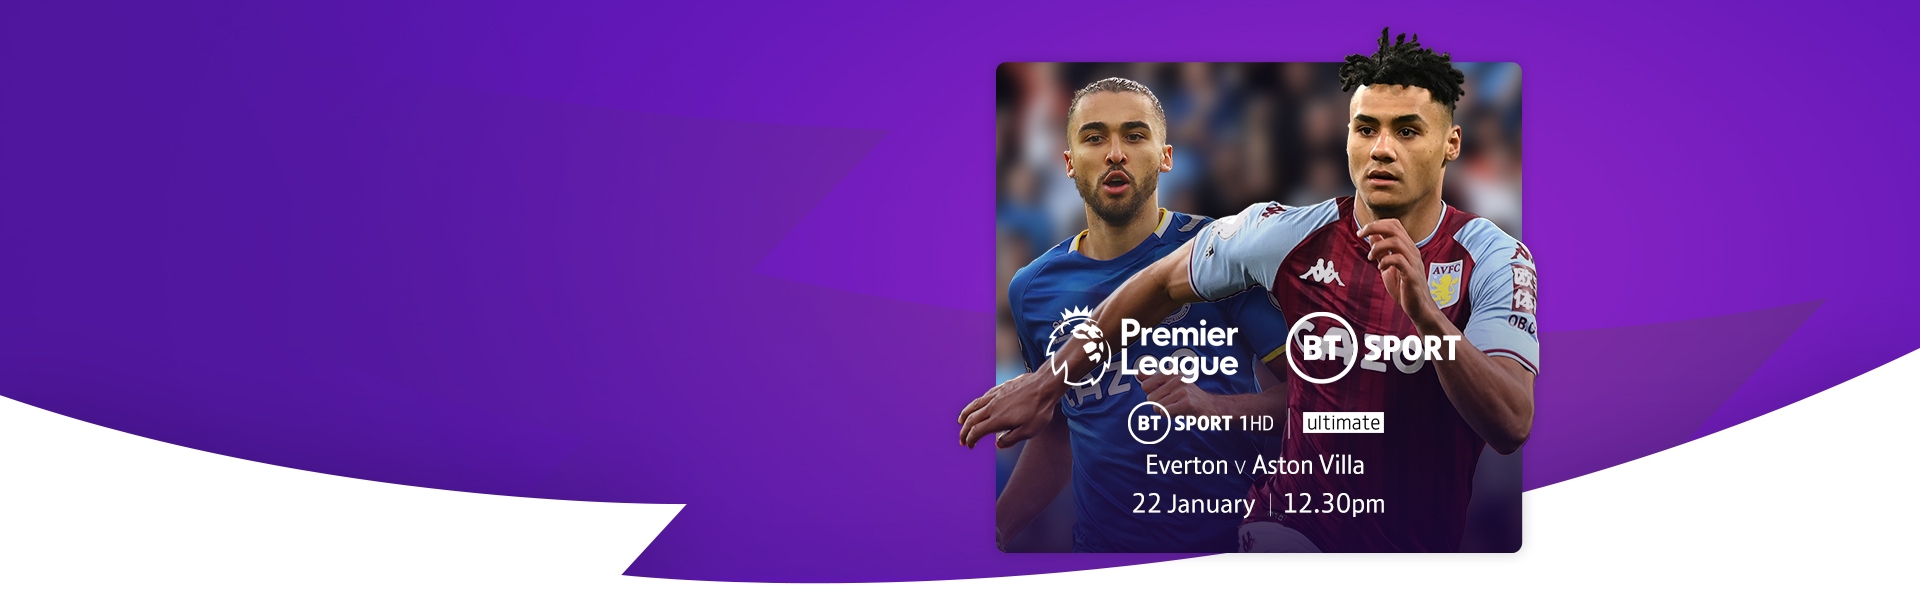 Premier League, live on BT Sport: Everton v Aston Villa, Saturday 22 January, 12.30pm